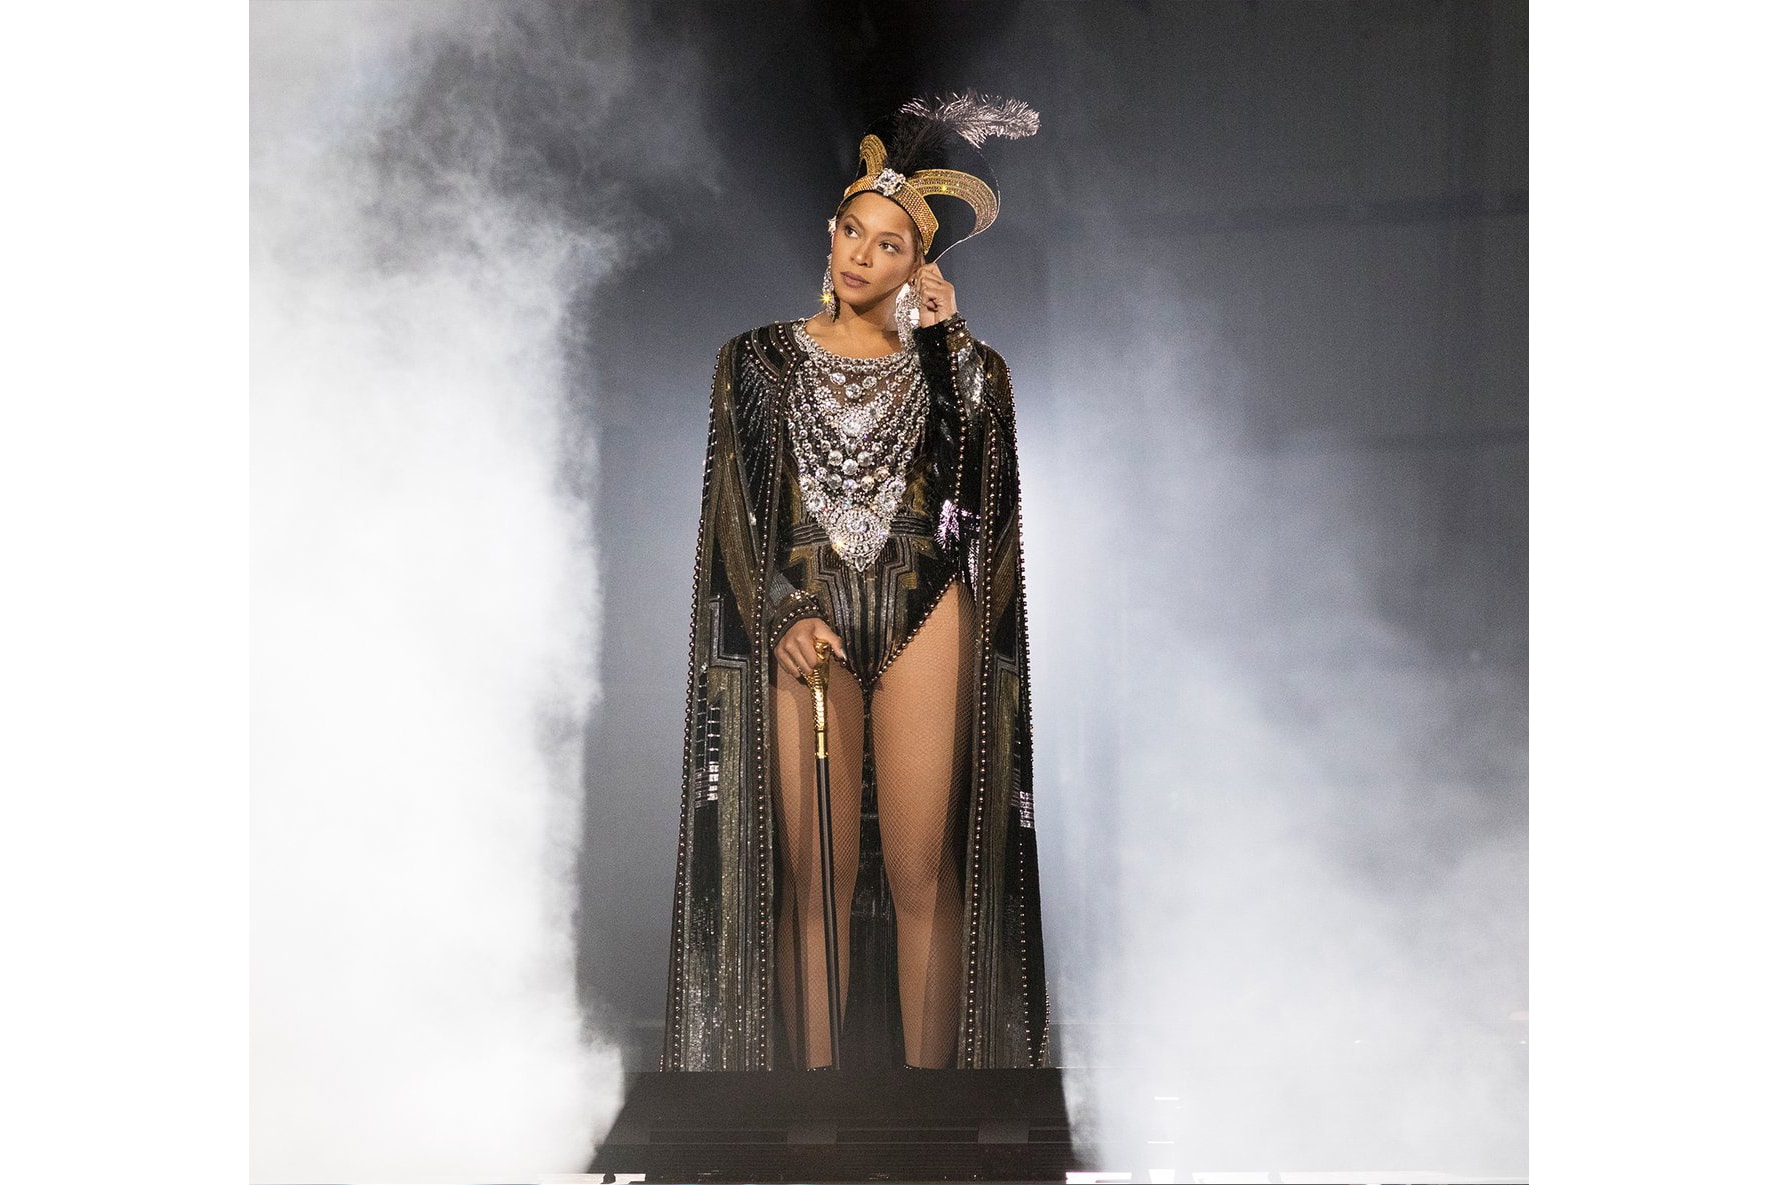 Beyonce Destinys Child Kelly Rowland Michelle Williams Jay Z Coachella Performance Watch Music Festival